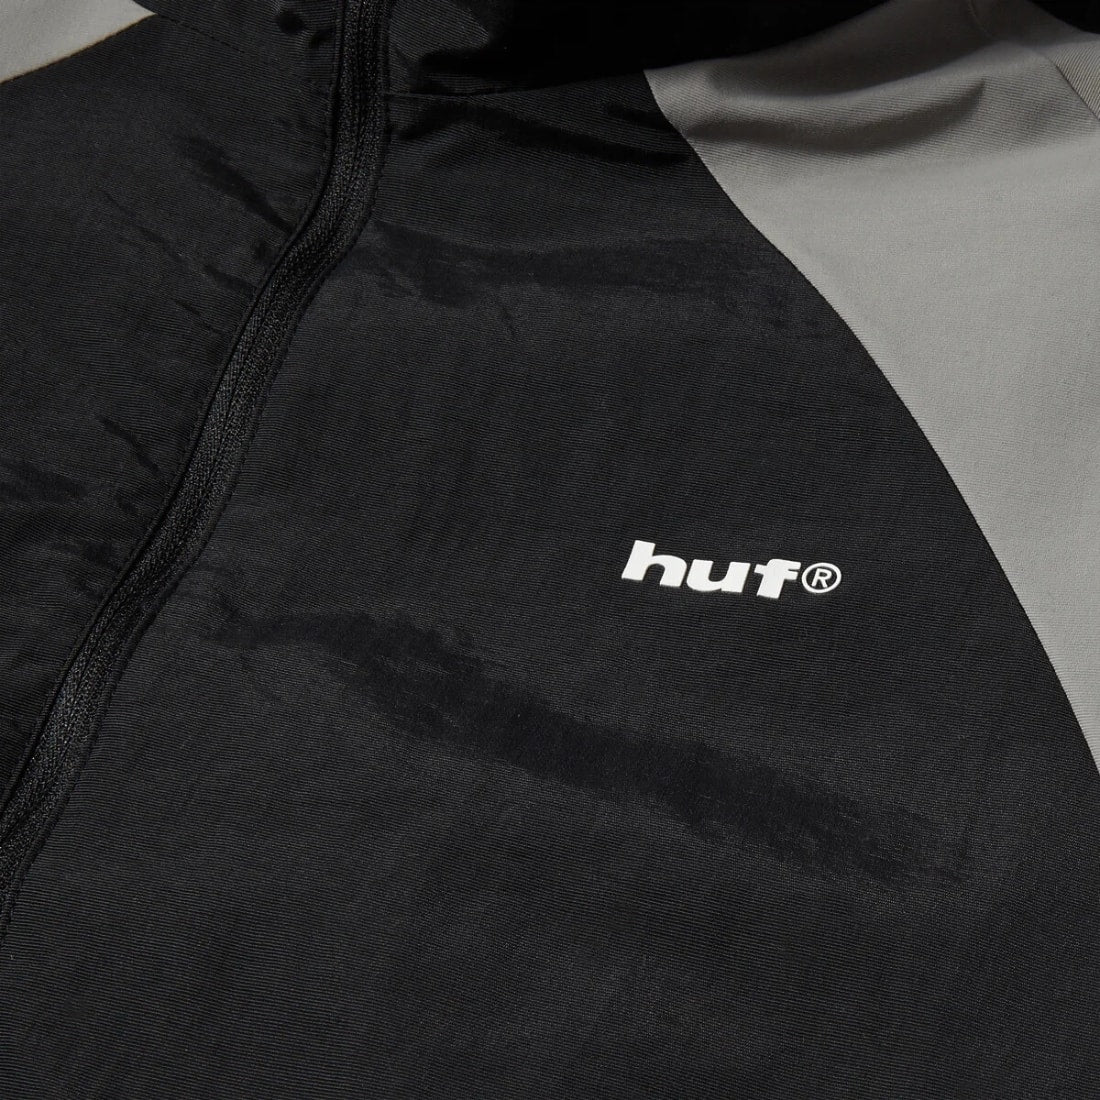 Huf Set Shell Jacket - Black - Mens Casual Jacket by Huf